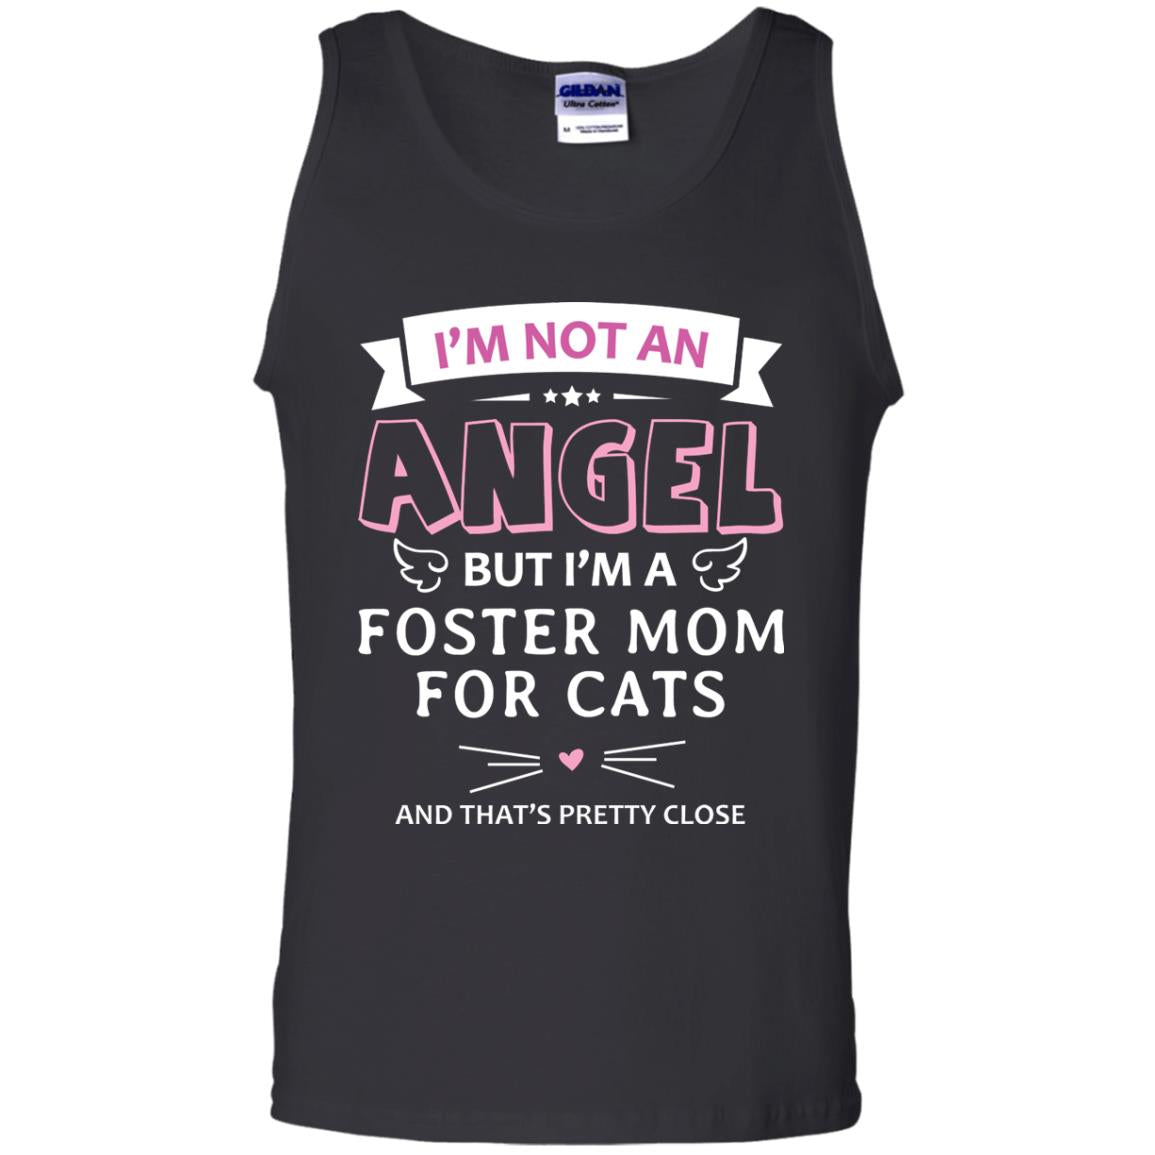 I_m Not An Angle But I_m A Foster Mom For Cats And That_s Pretty Close ShirtG220 Gildan 100% Cotton Tank Top